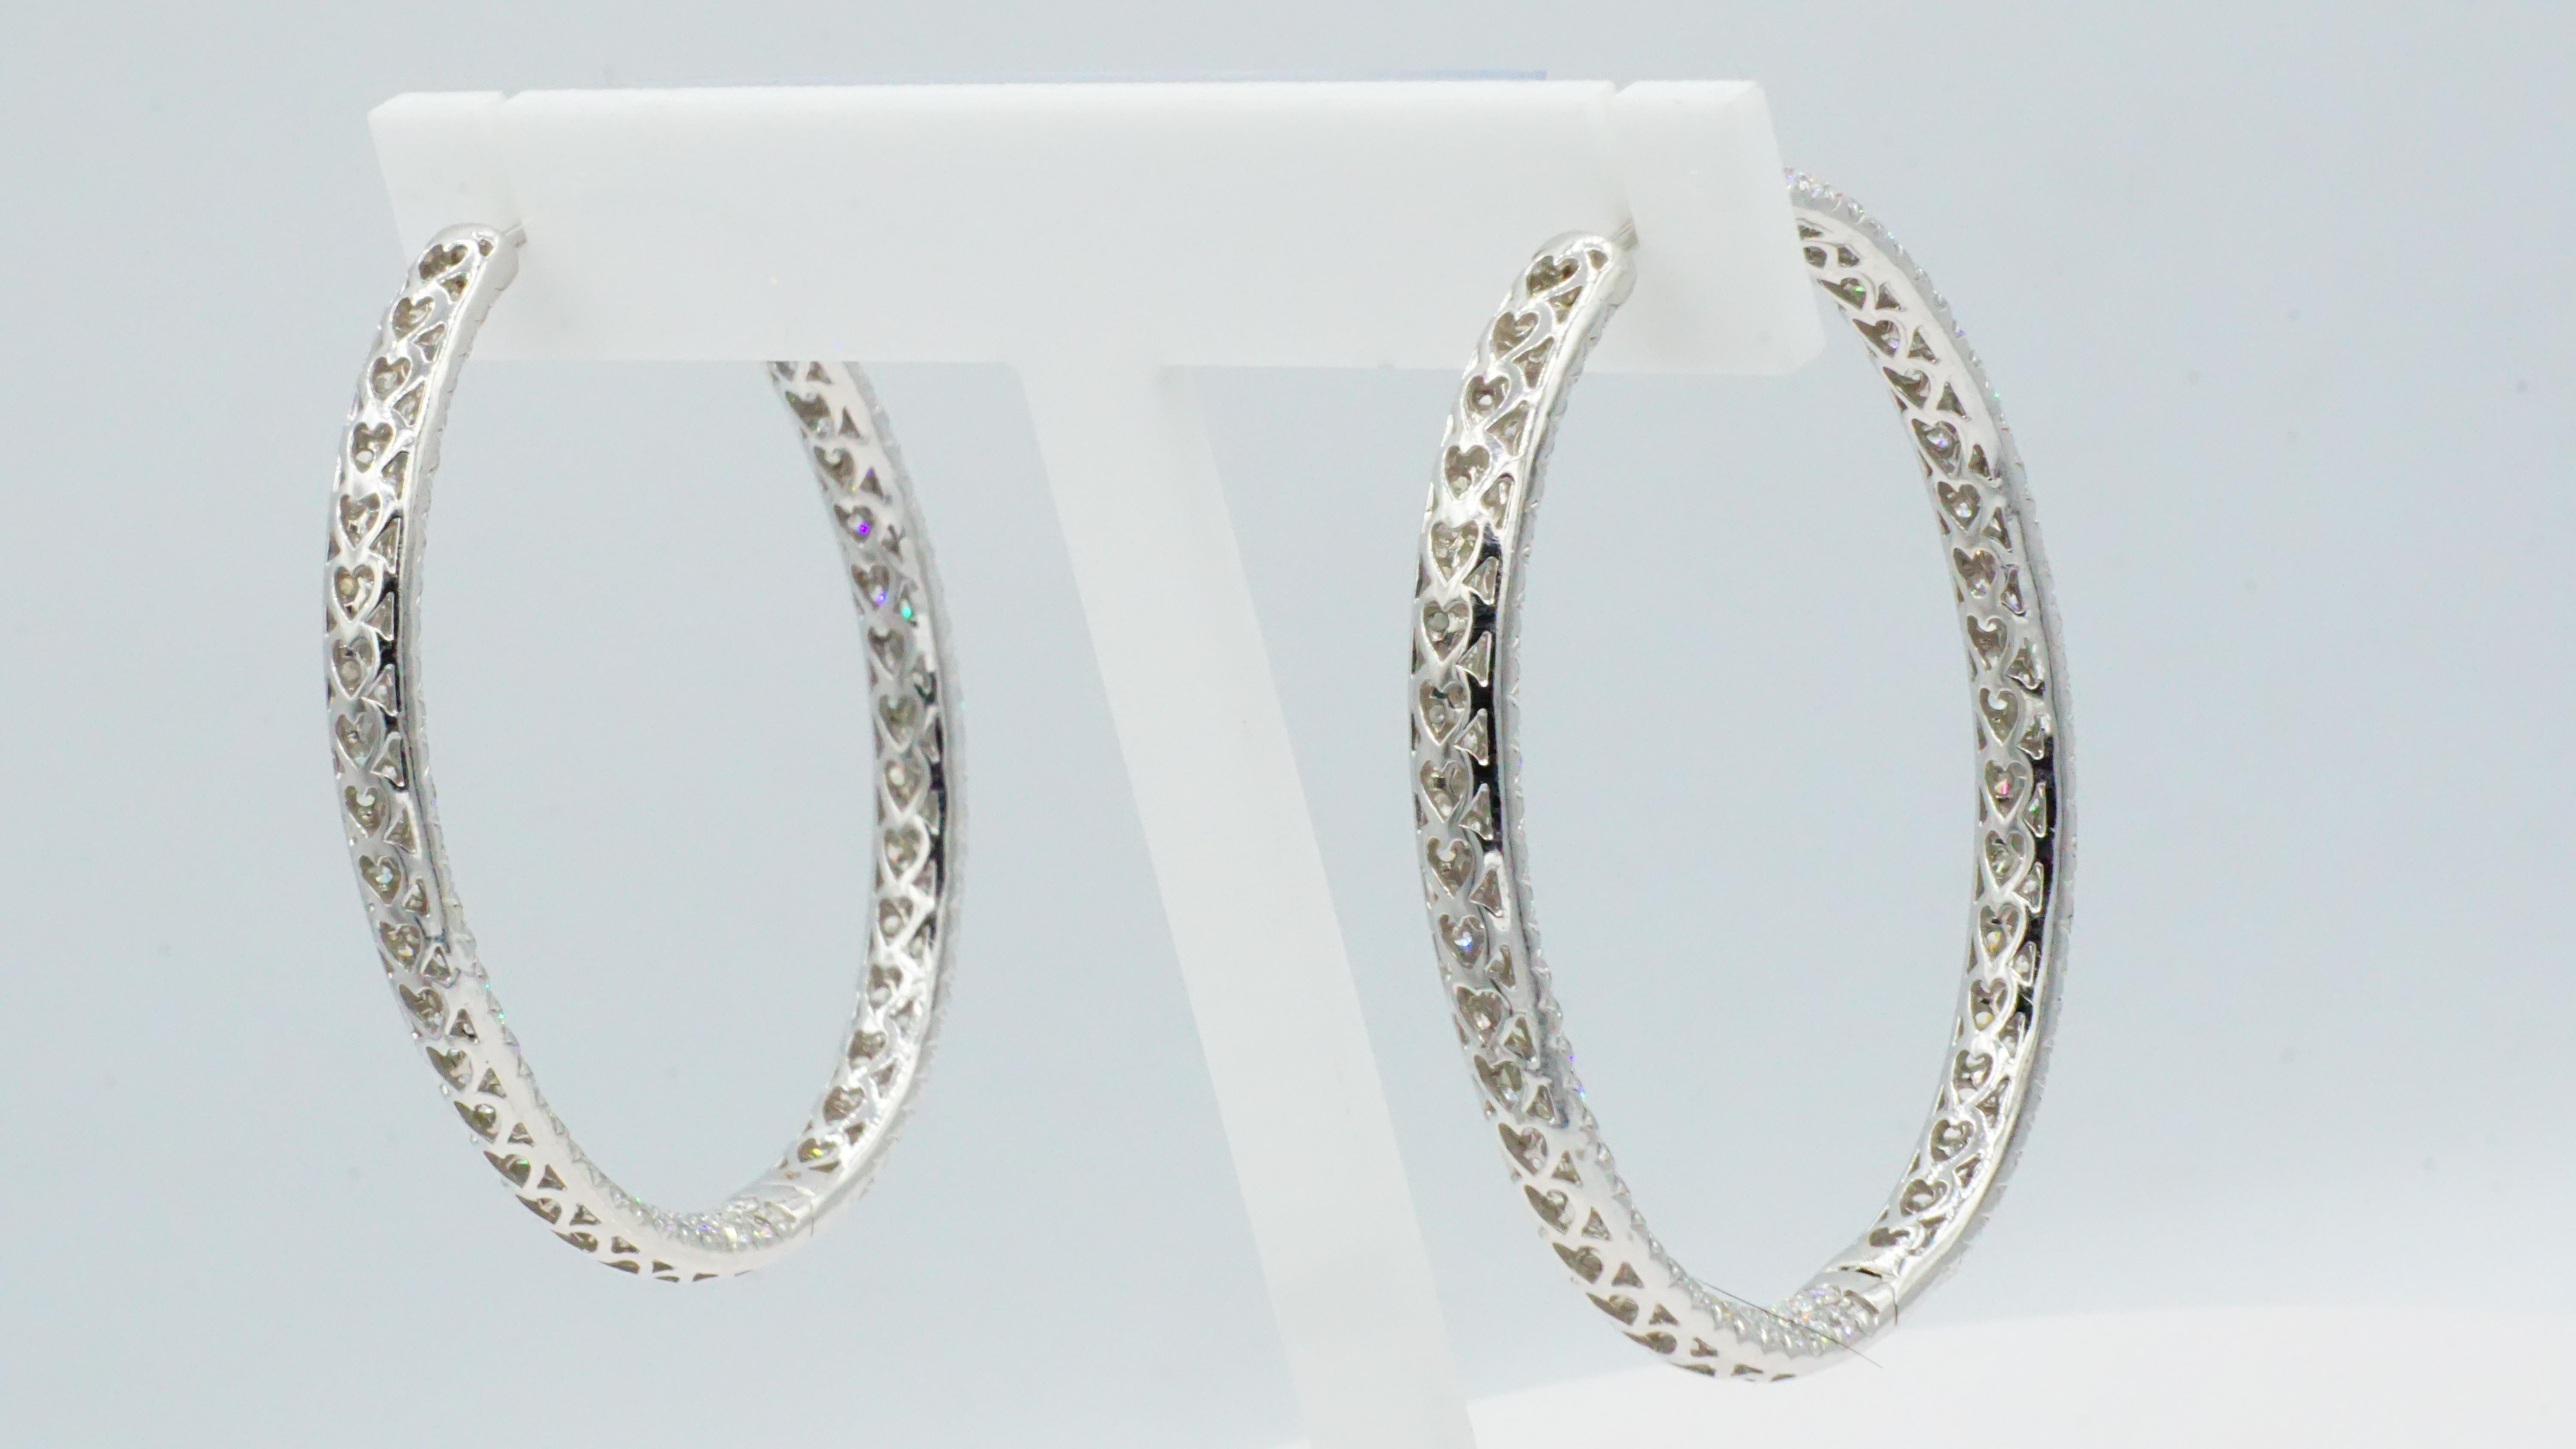 Modern 18kt White Gold Pave Diamond Hoop Earrings, Hinged Oval, 10.80cttw., Like-New